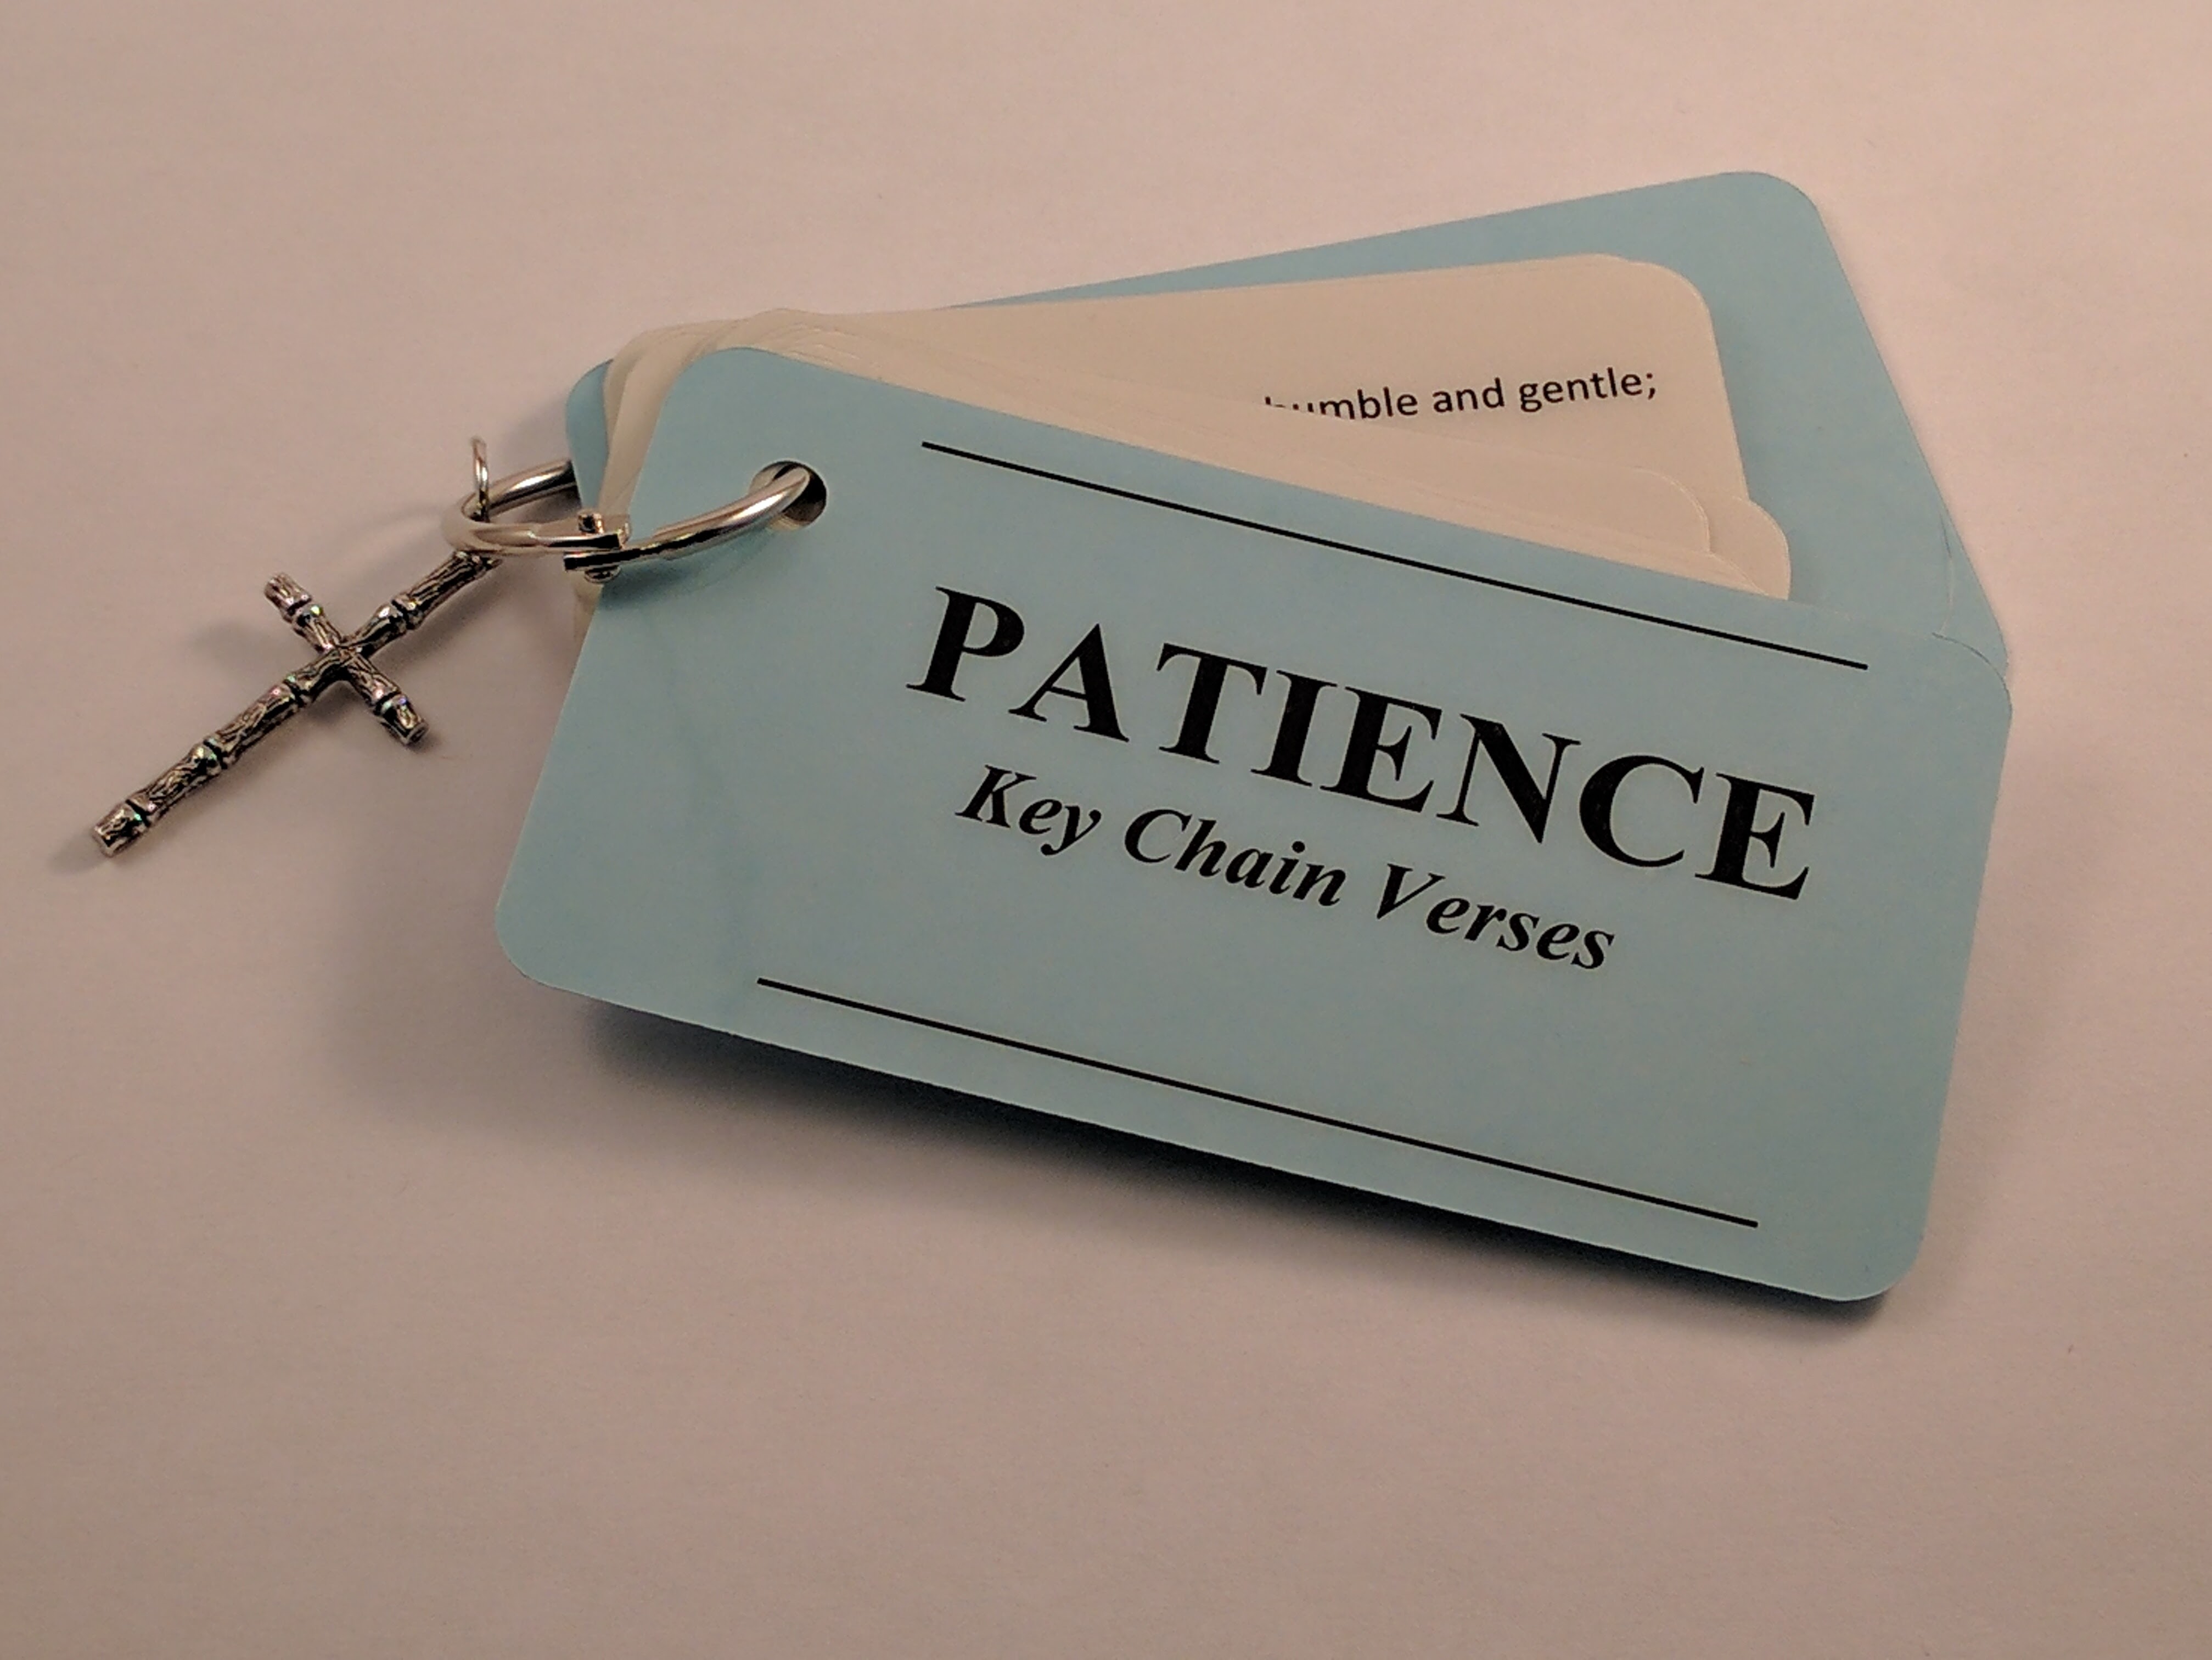 Patience Keychain Verses.